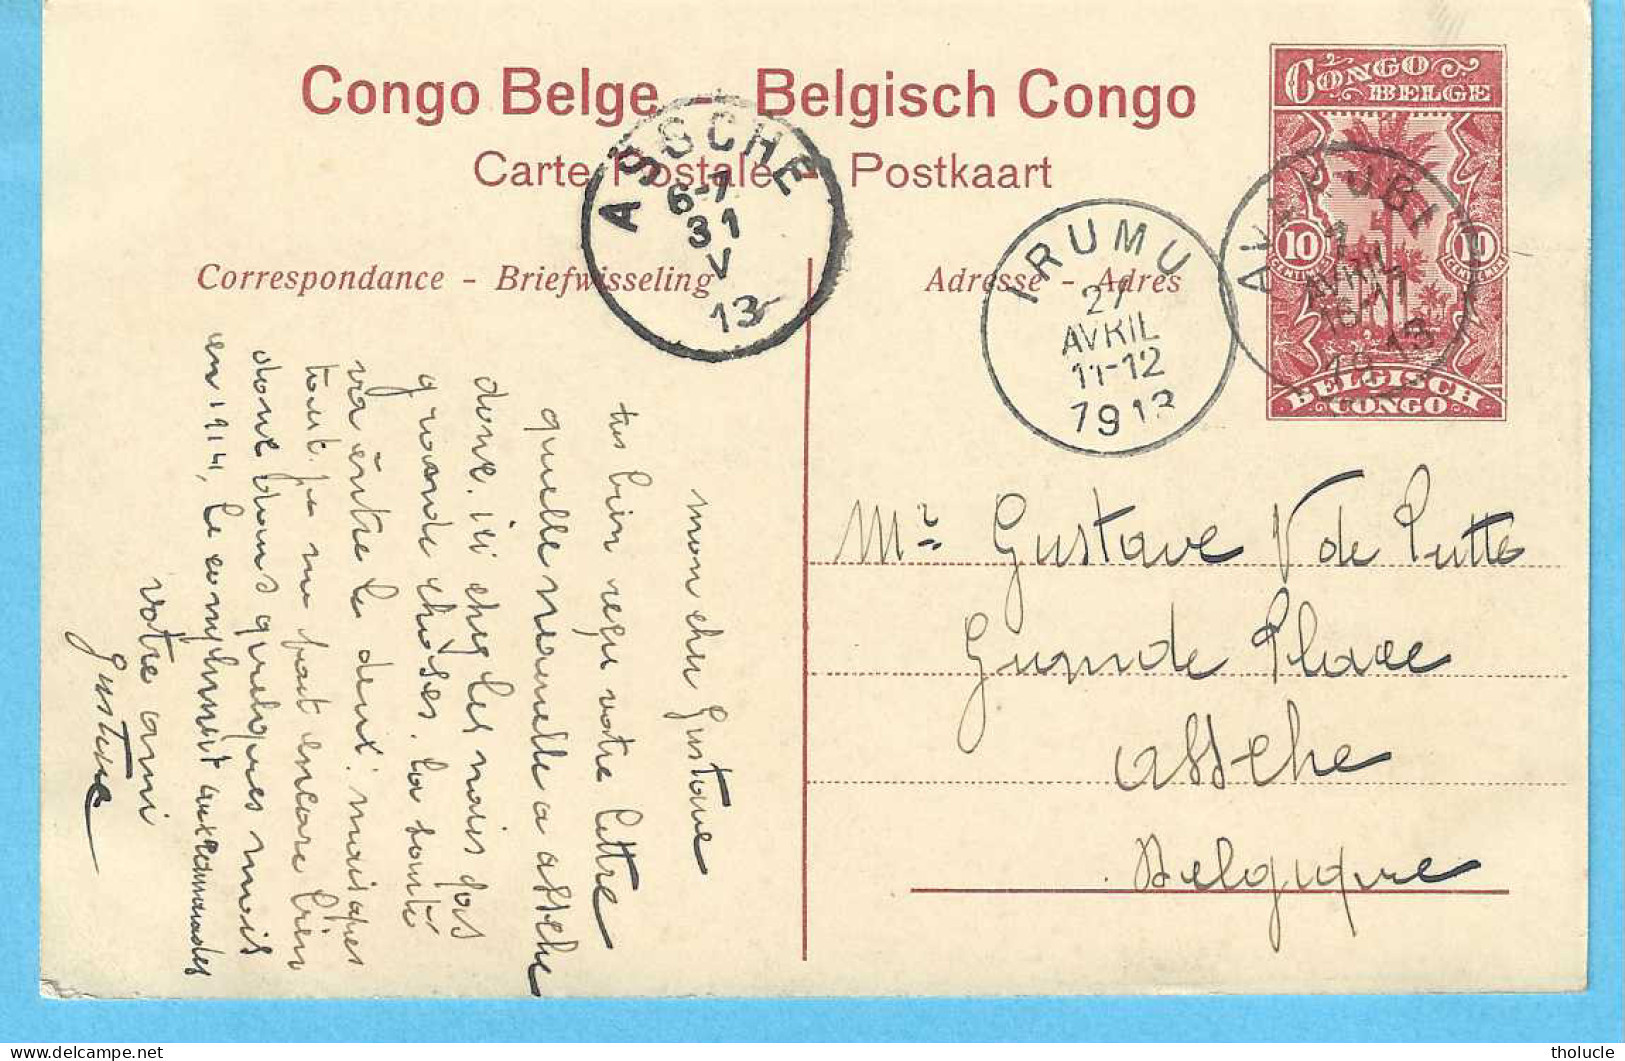 Belgisch Congo Belge-Entier Postal Illustré 10c-1913-Léopoldville-Les Bassins-De Dokken-Cachet-IRUMU-AVAKUBI-1913" - Stamped Stationery